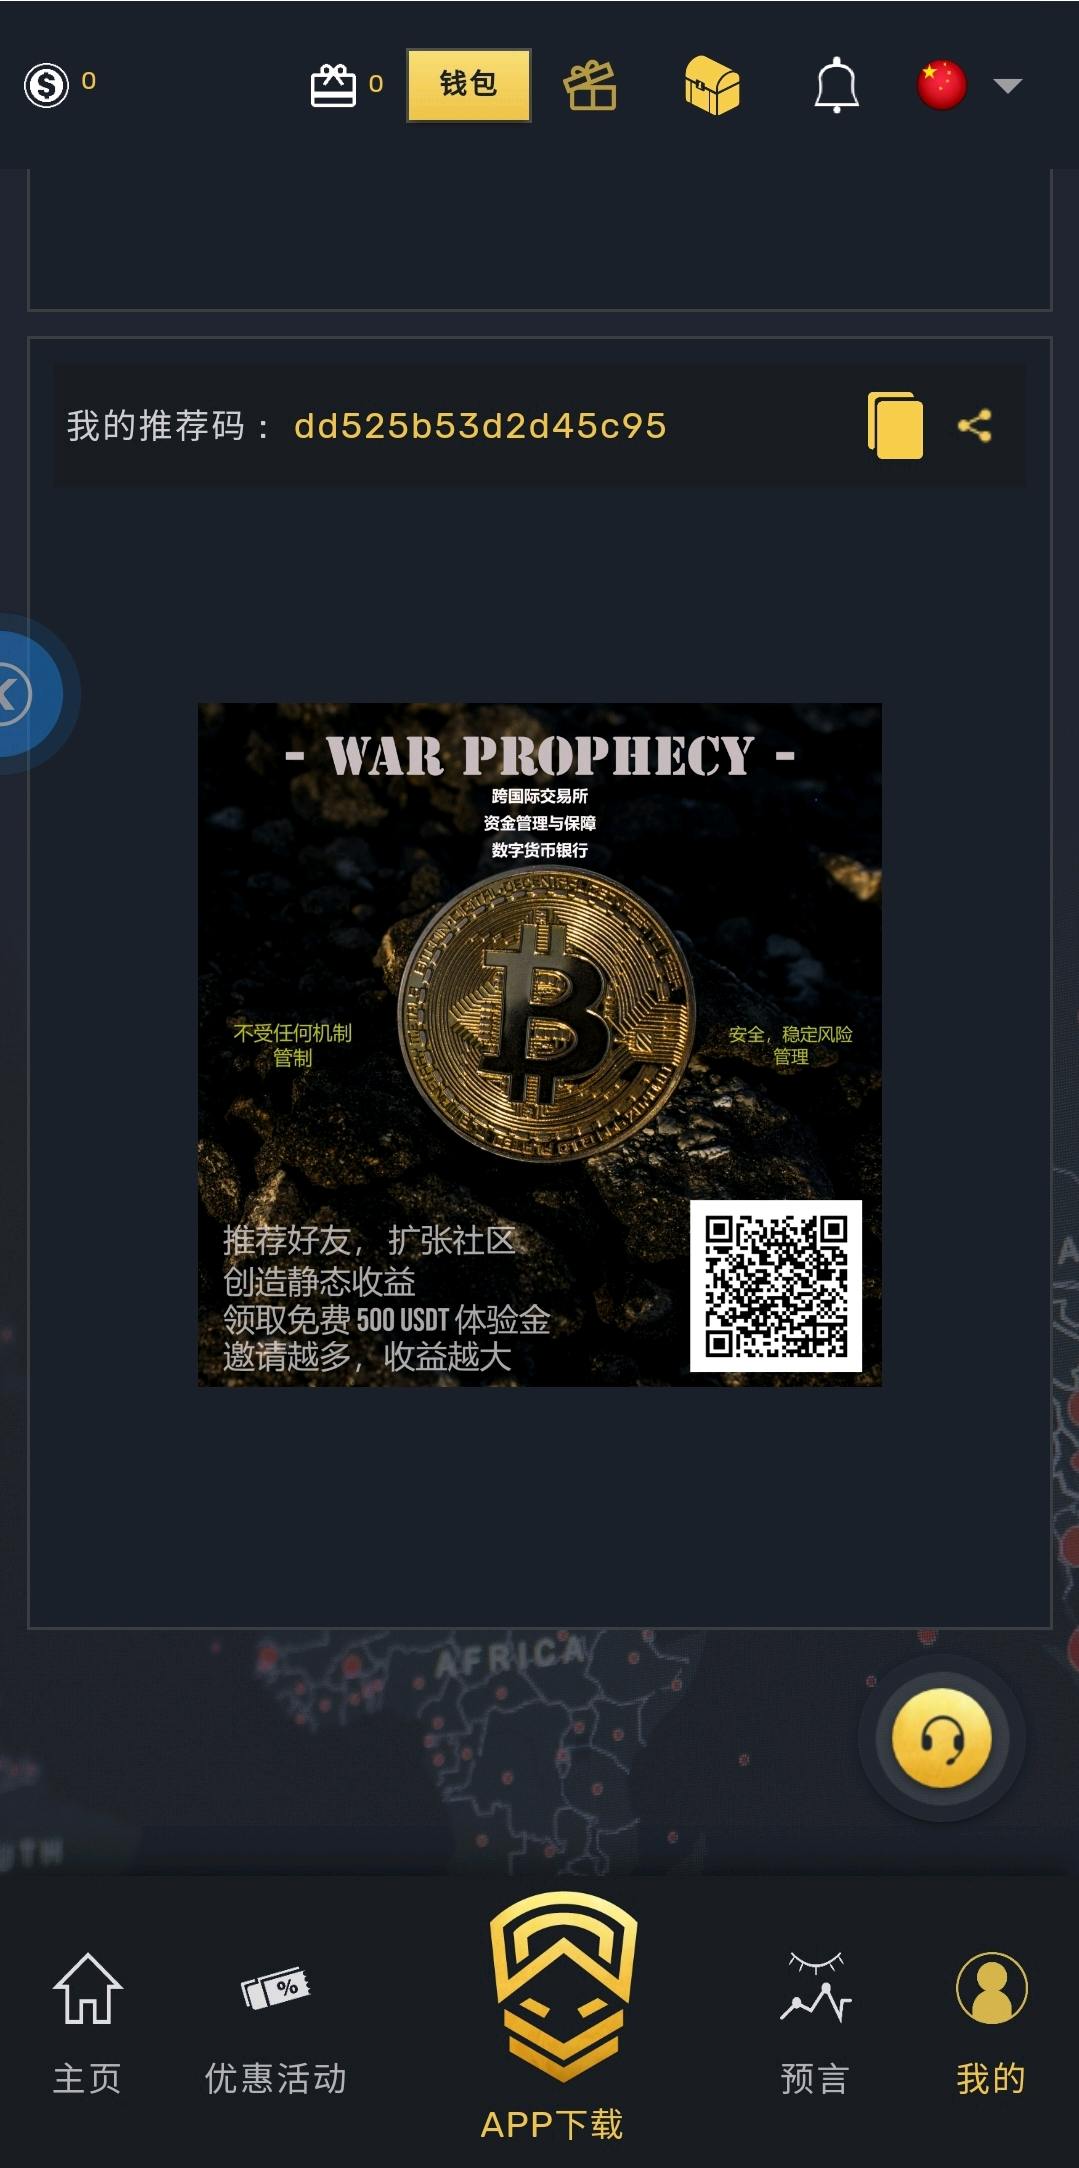 war prophecy 免费零撸u 0撸